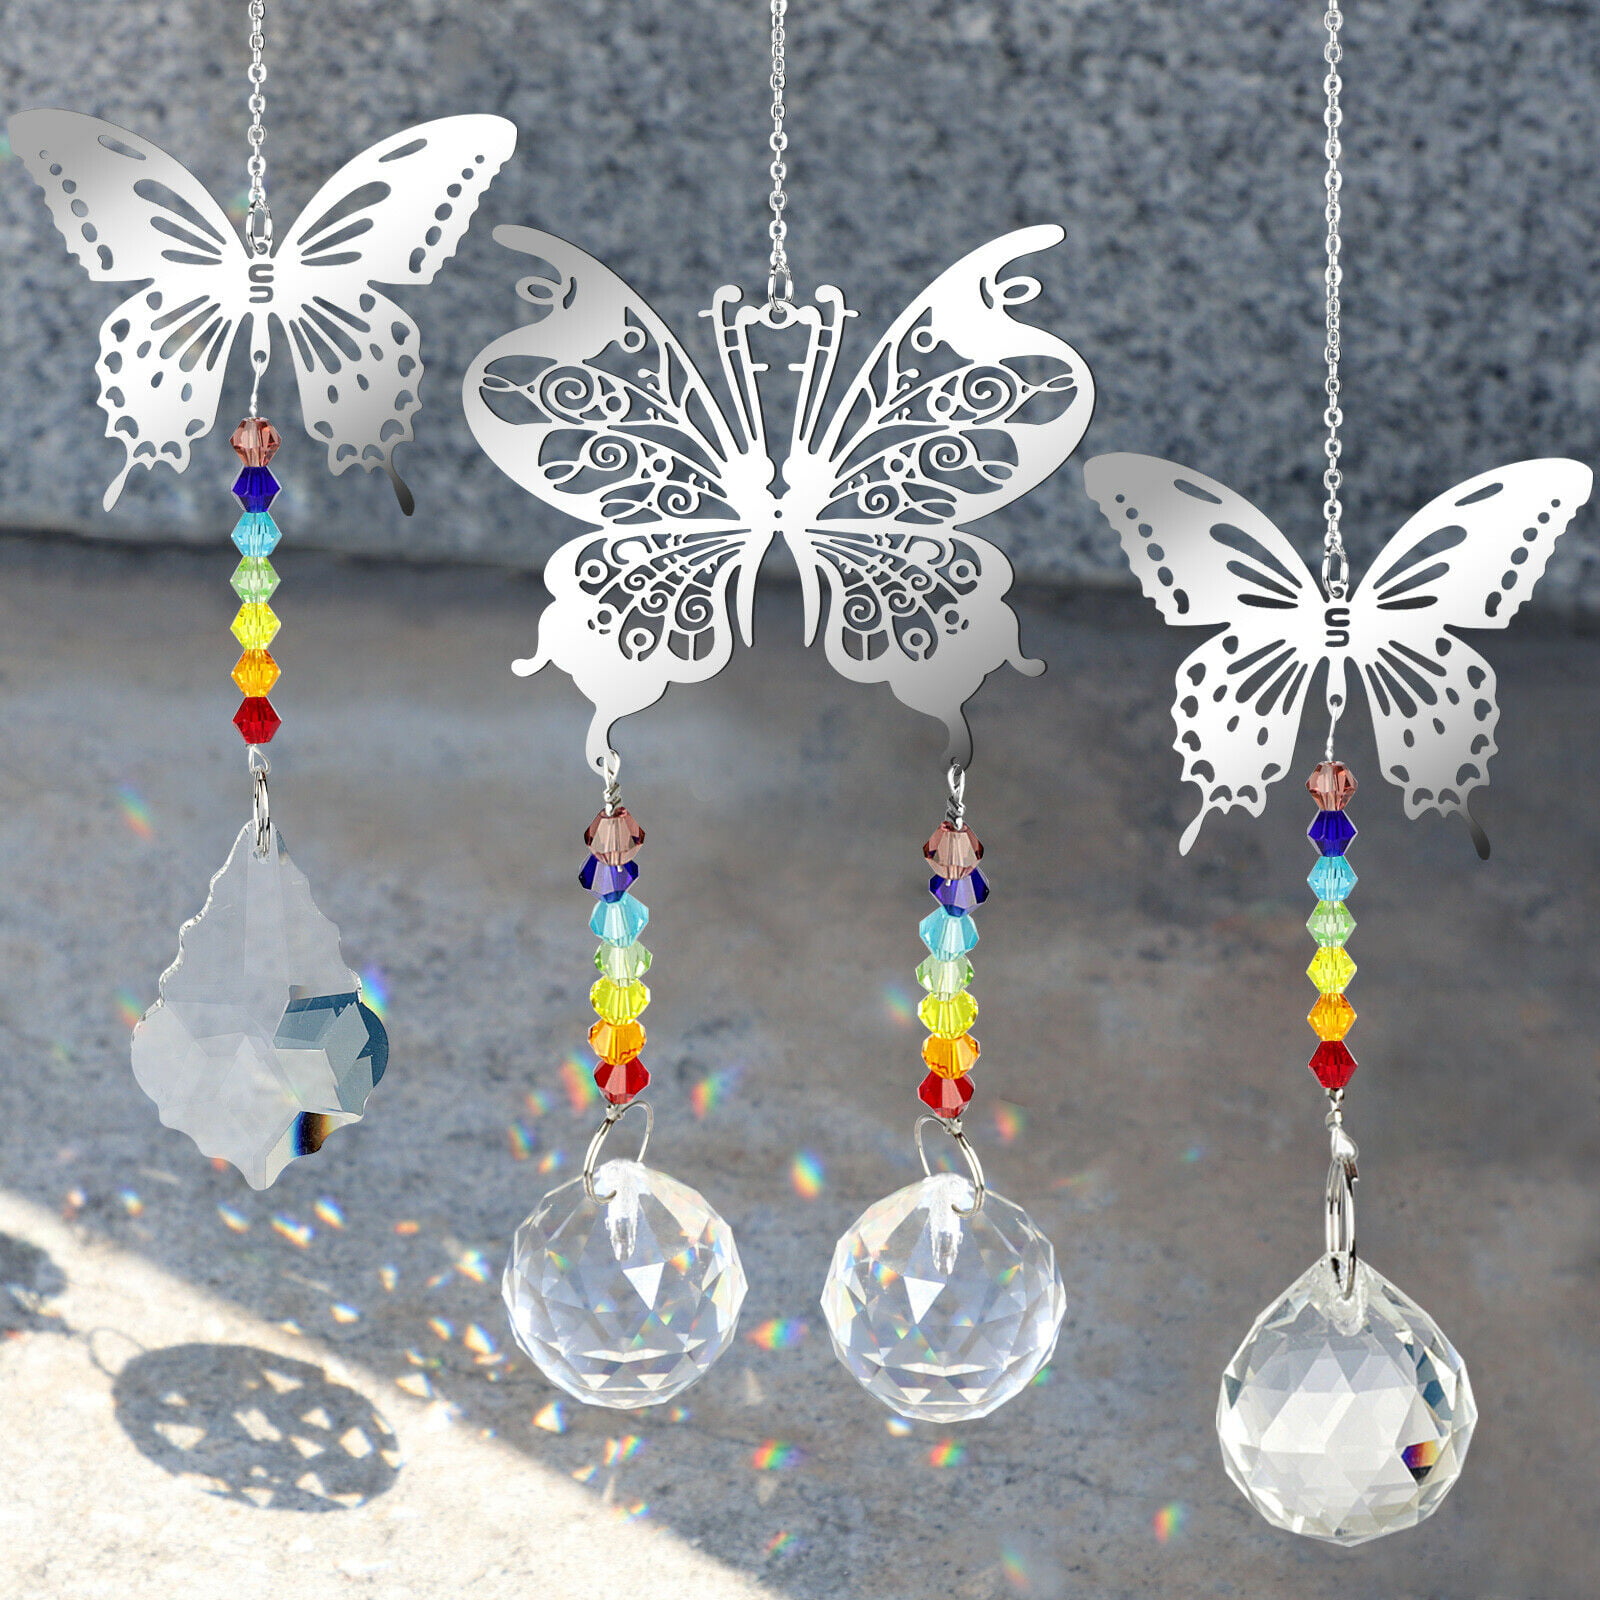 Crystal Prisms Ball Suncatcher Butterfly Home Hanging Ornament Car Pendant Decor 